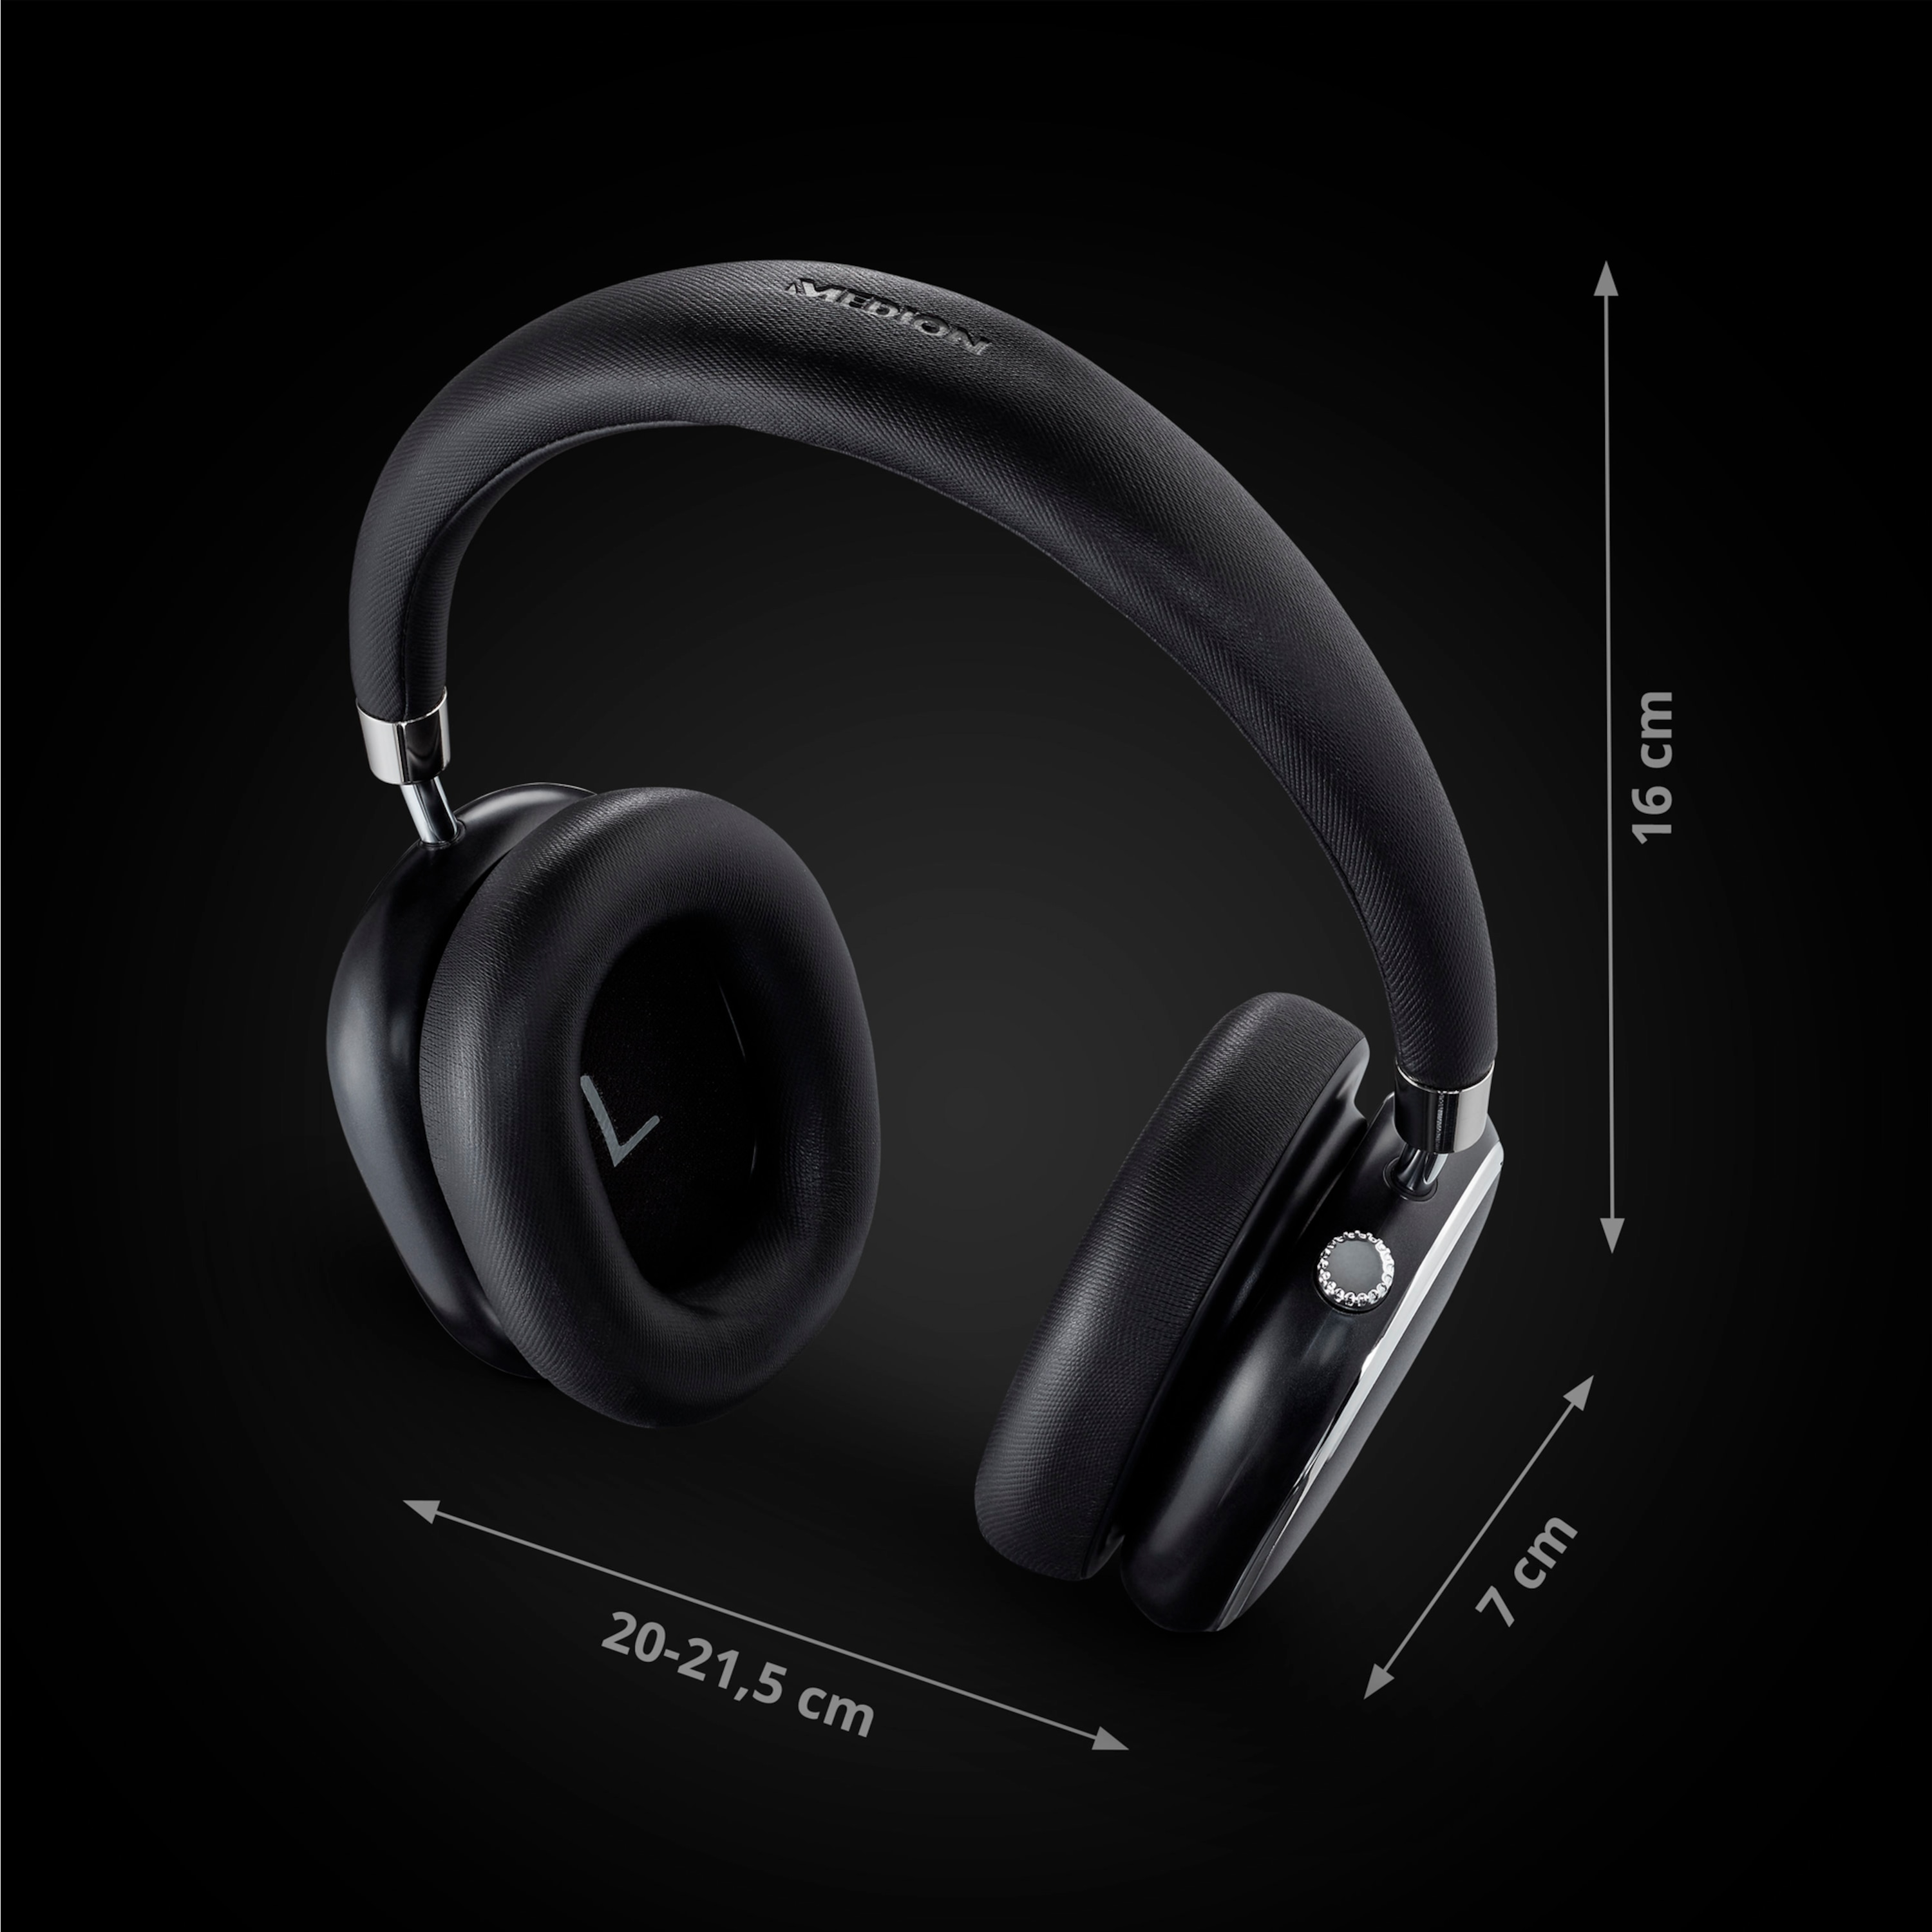 Over-ear E62474, Kopfhörer kabelgebunden, lange schwarz LIFE® MEDION Akkulaufzeit, Active-Noise-Cancelling, kabellos oder Bluetooth®,